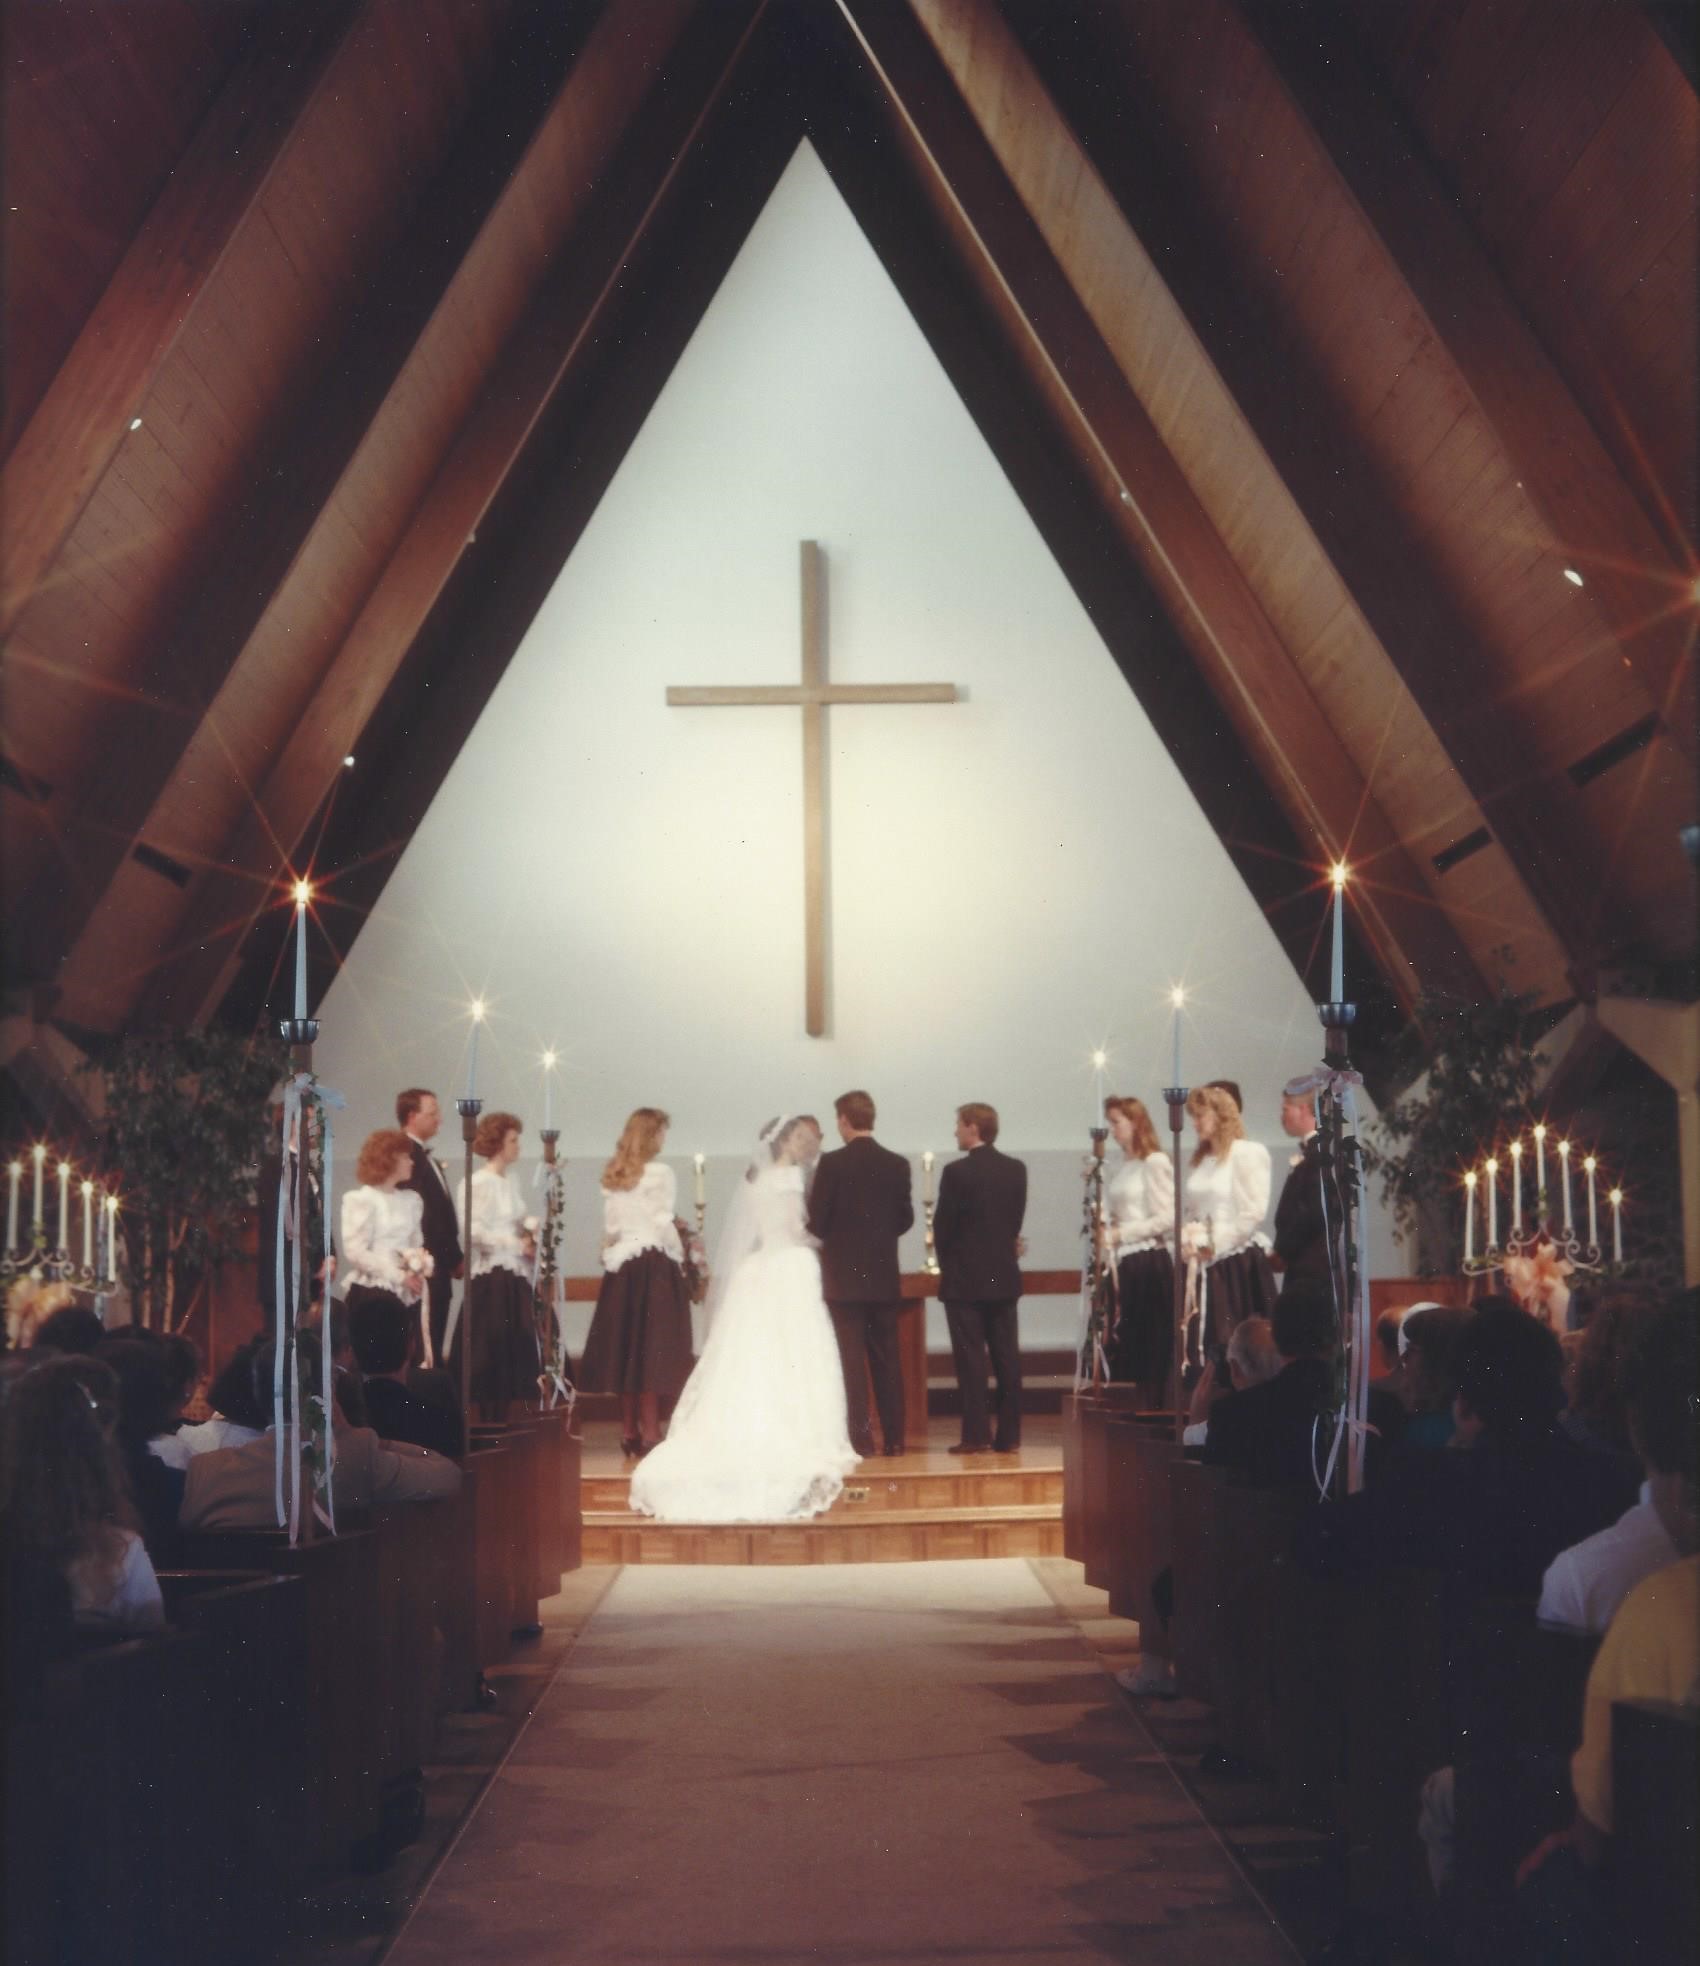 Wedding ceremony in the church